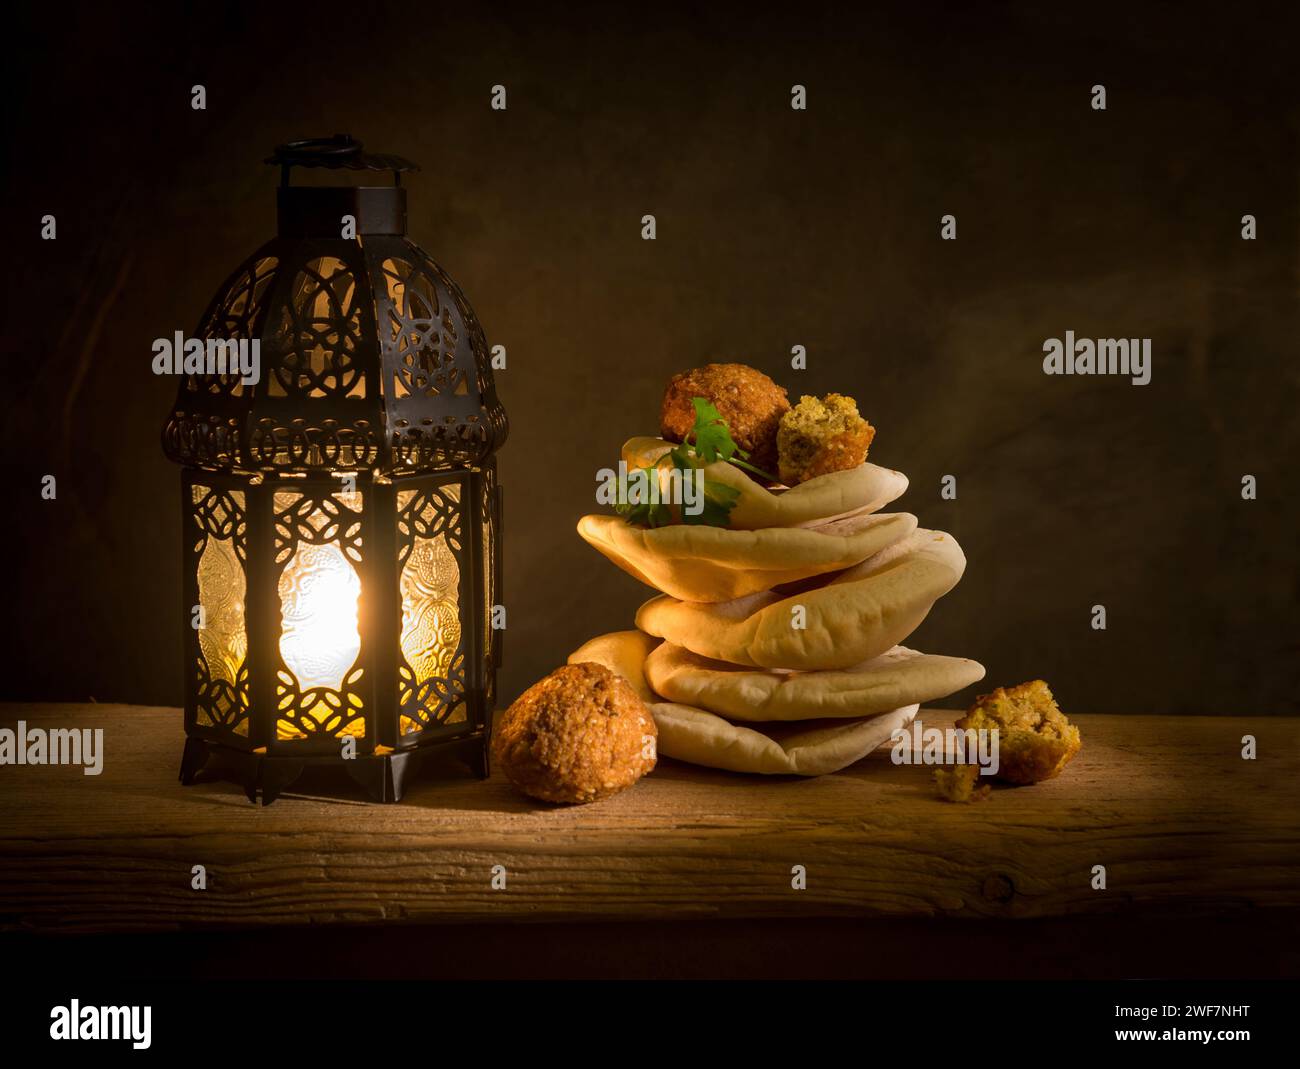 Middle Eastern cuisine Falafel and Khuboos with Ramadan lantern. Beautiful Ramadan food photo or still life. Iftar food photo. Stock Photo